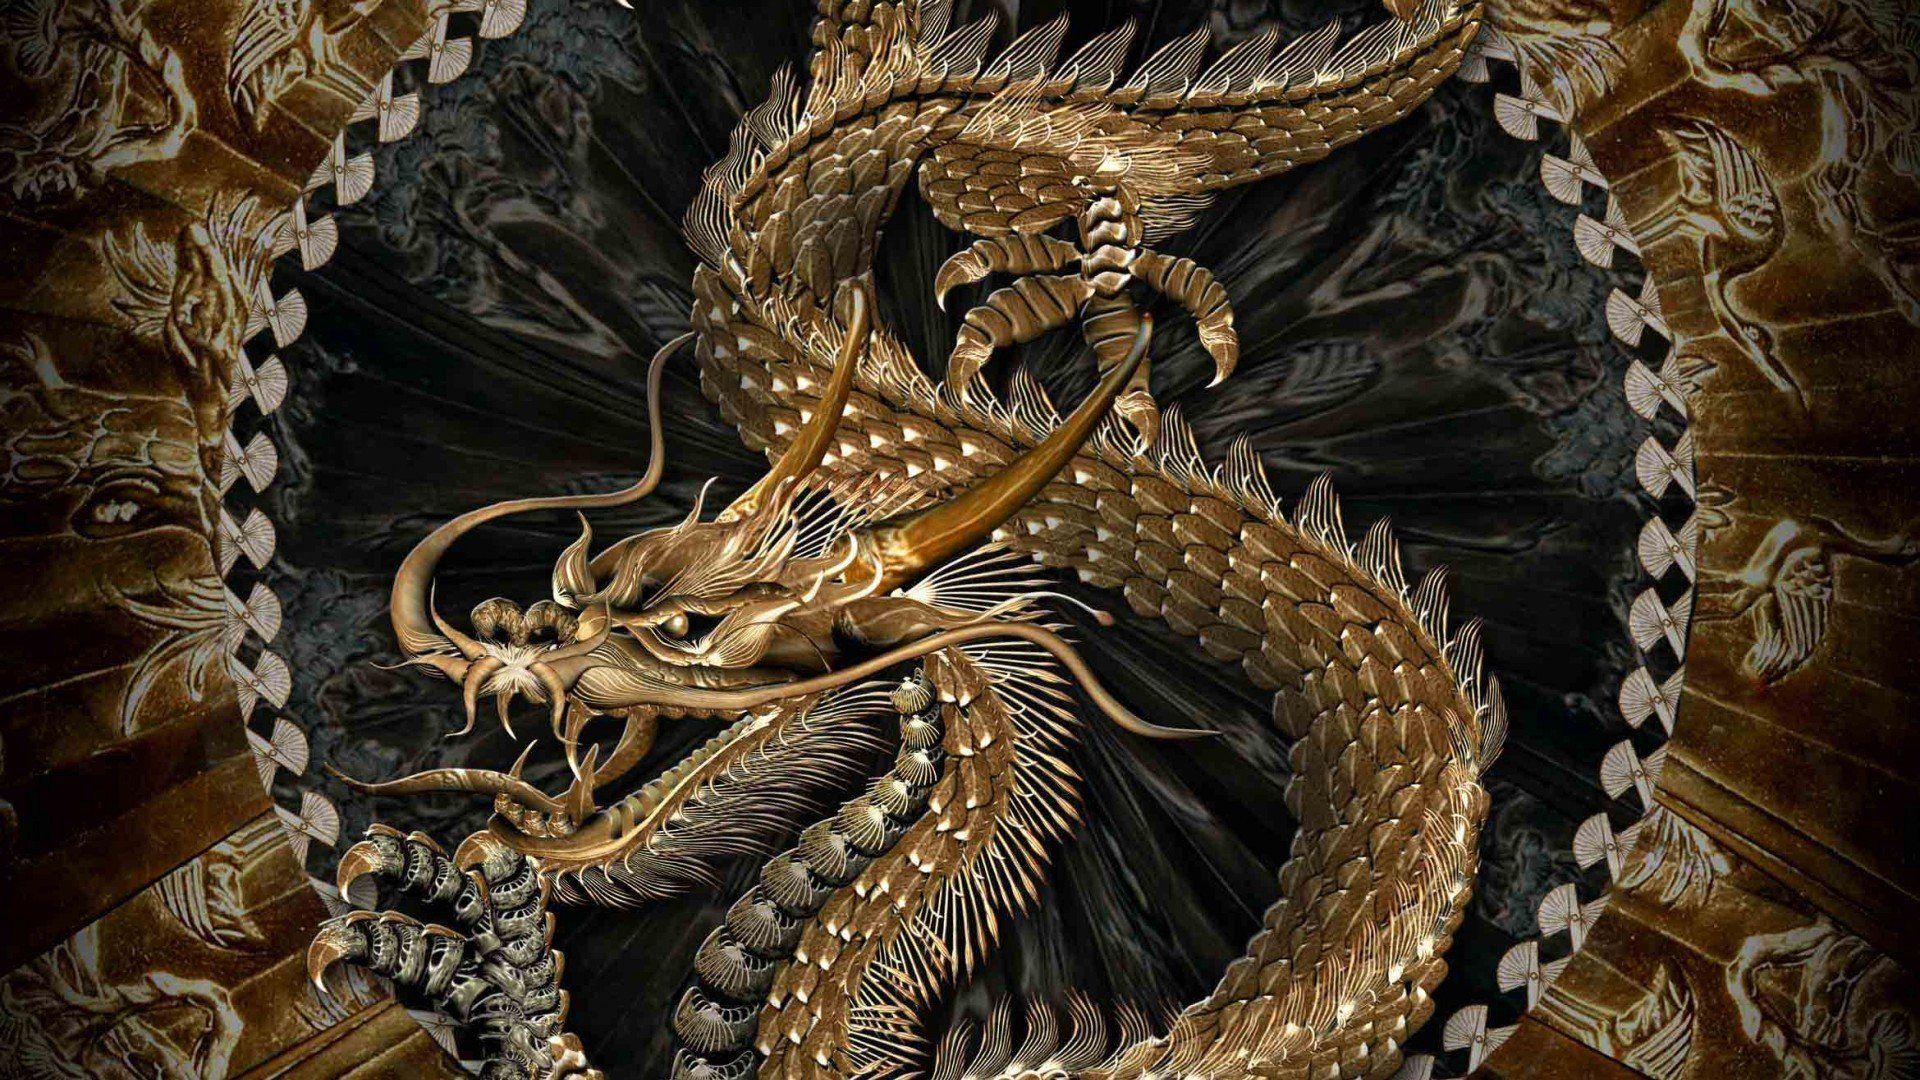 Dragons wallpapers | WallpaperUP